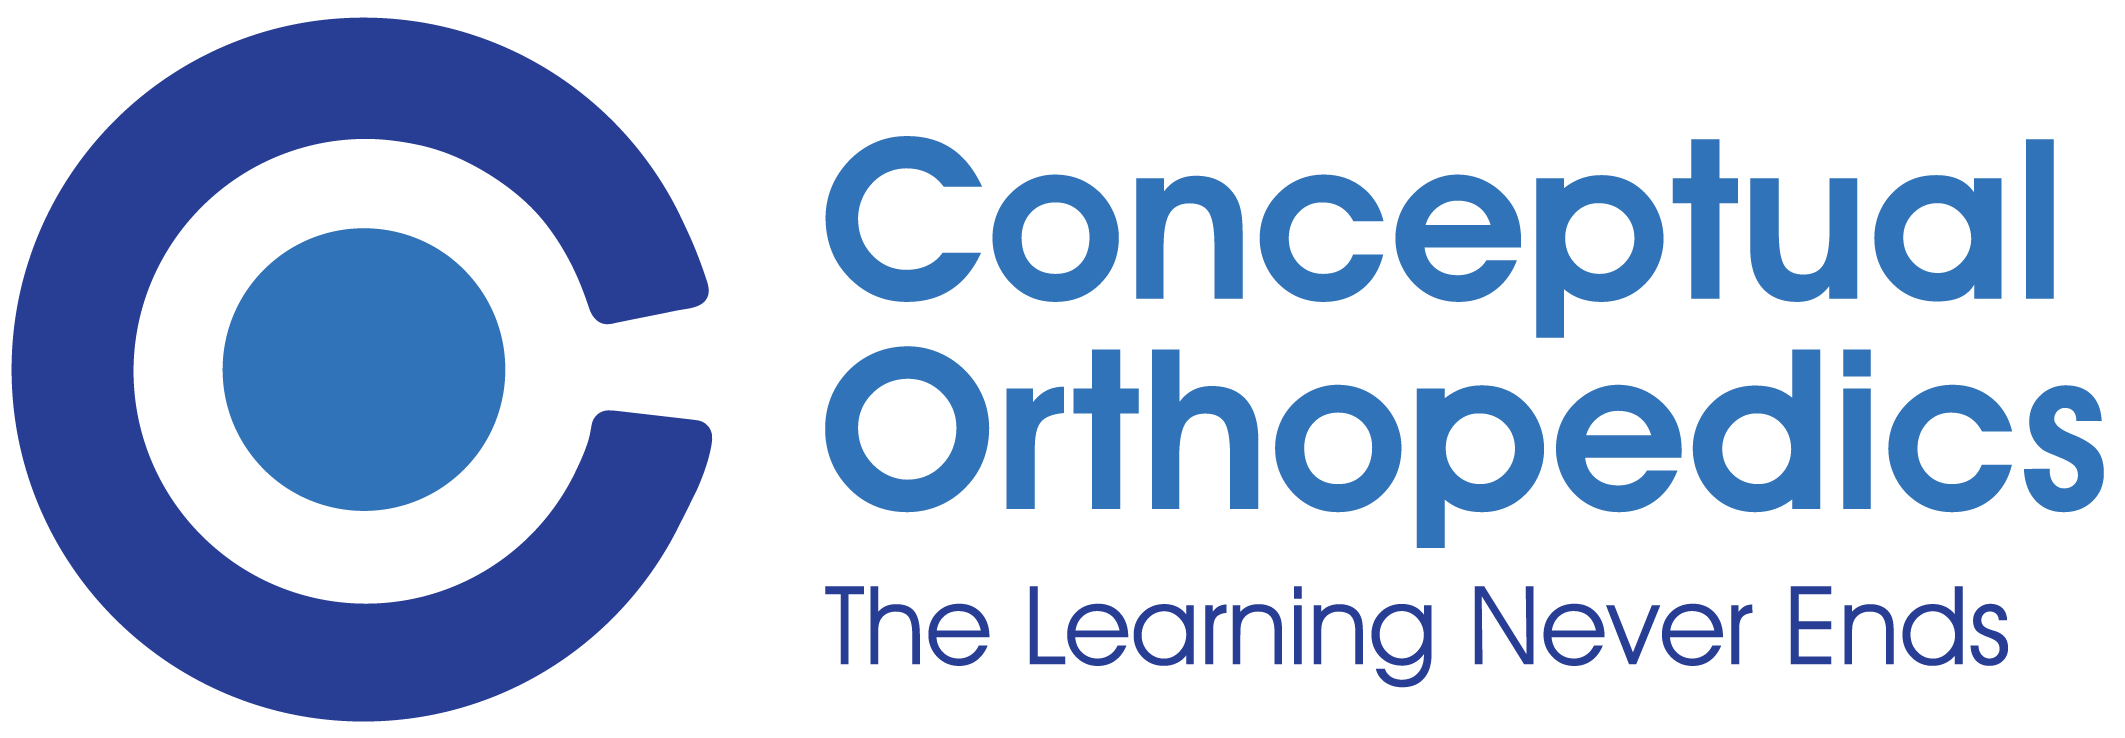 Conceptual Orthopedics banner